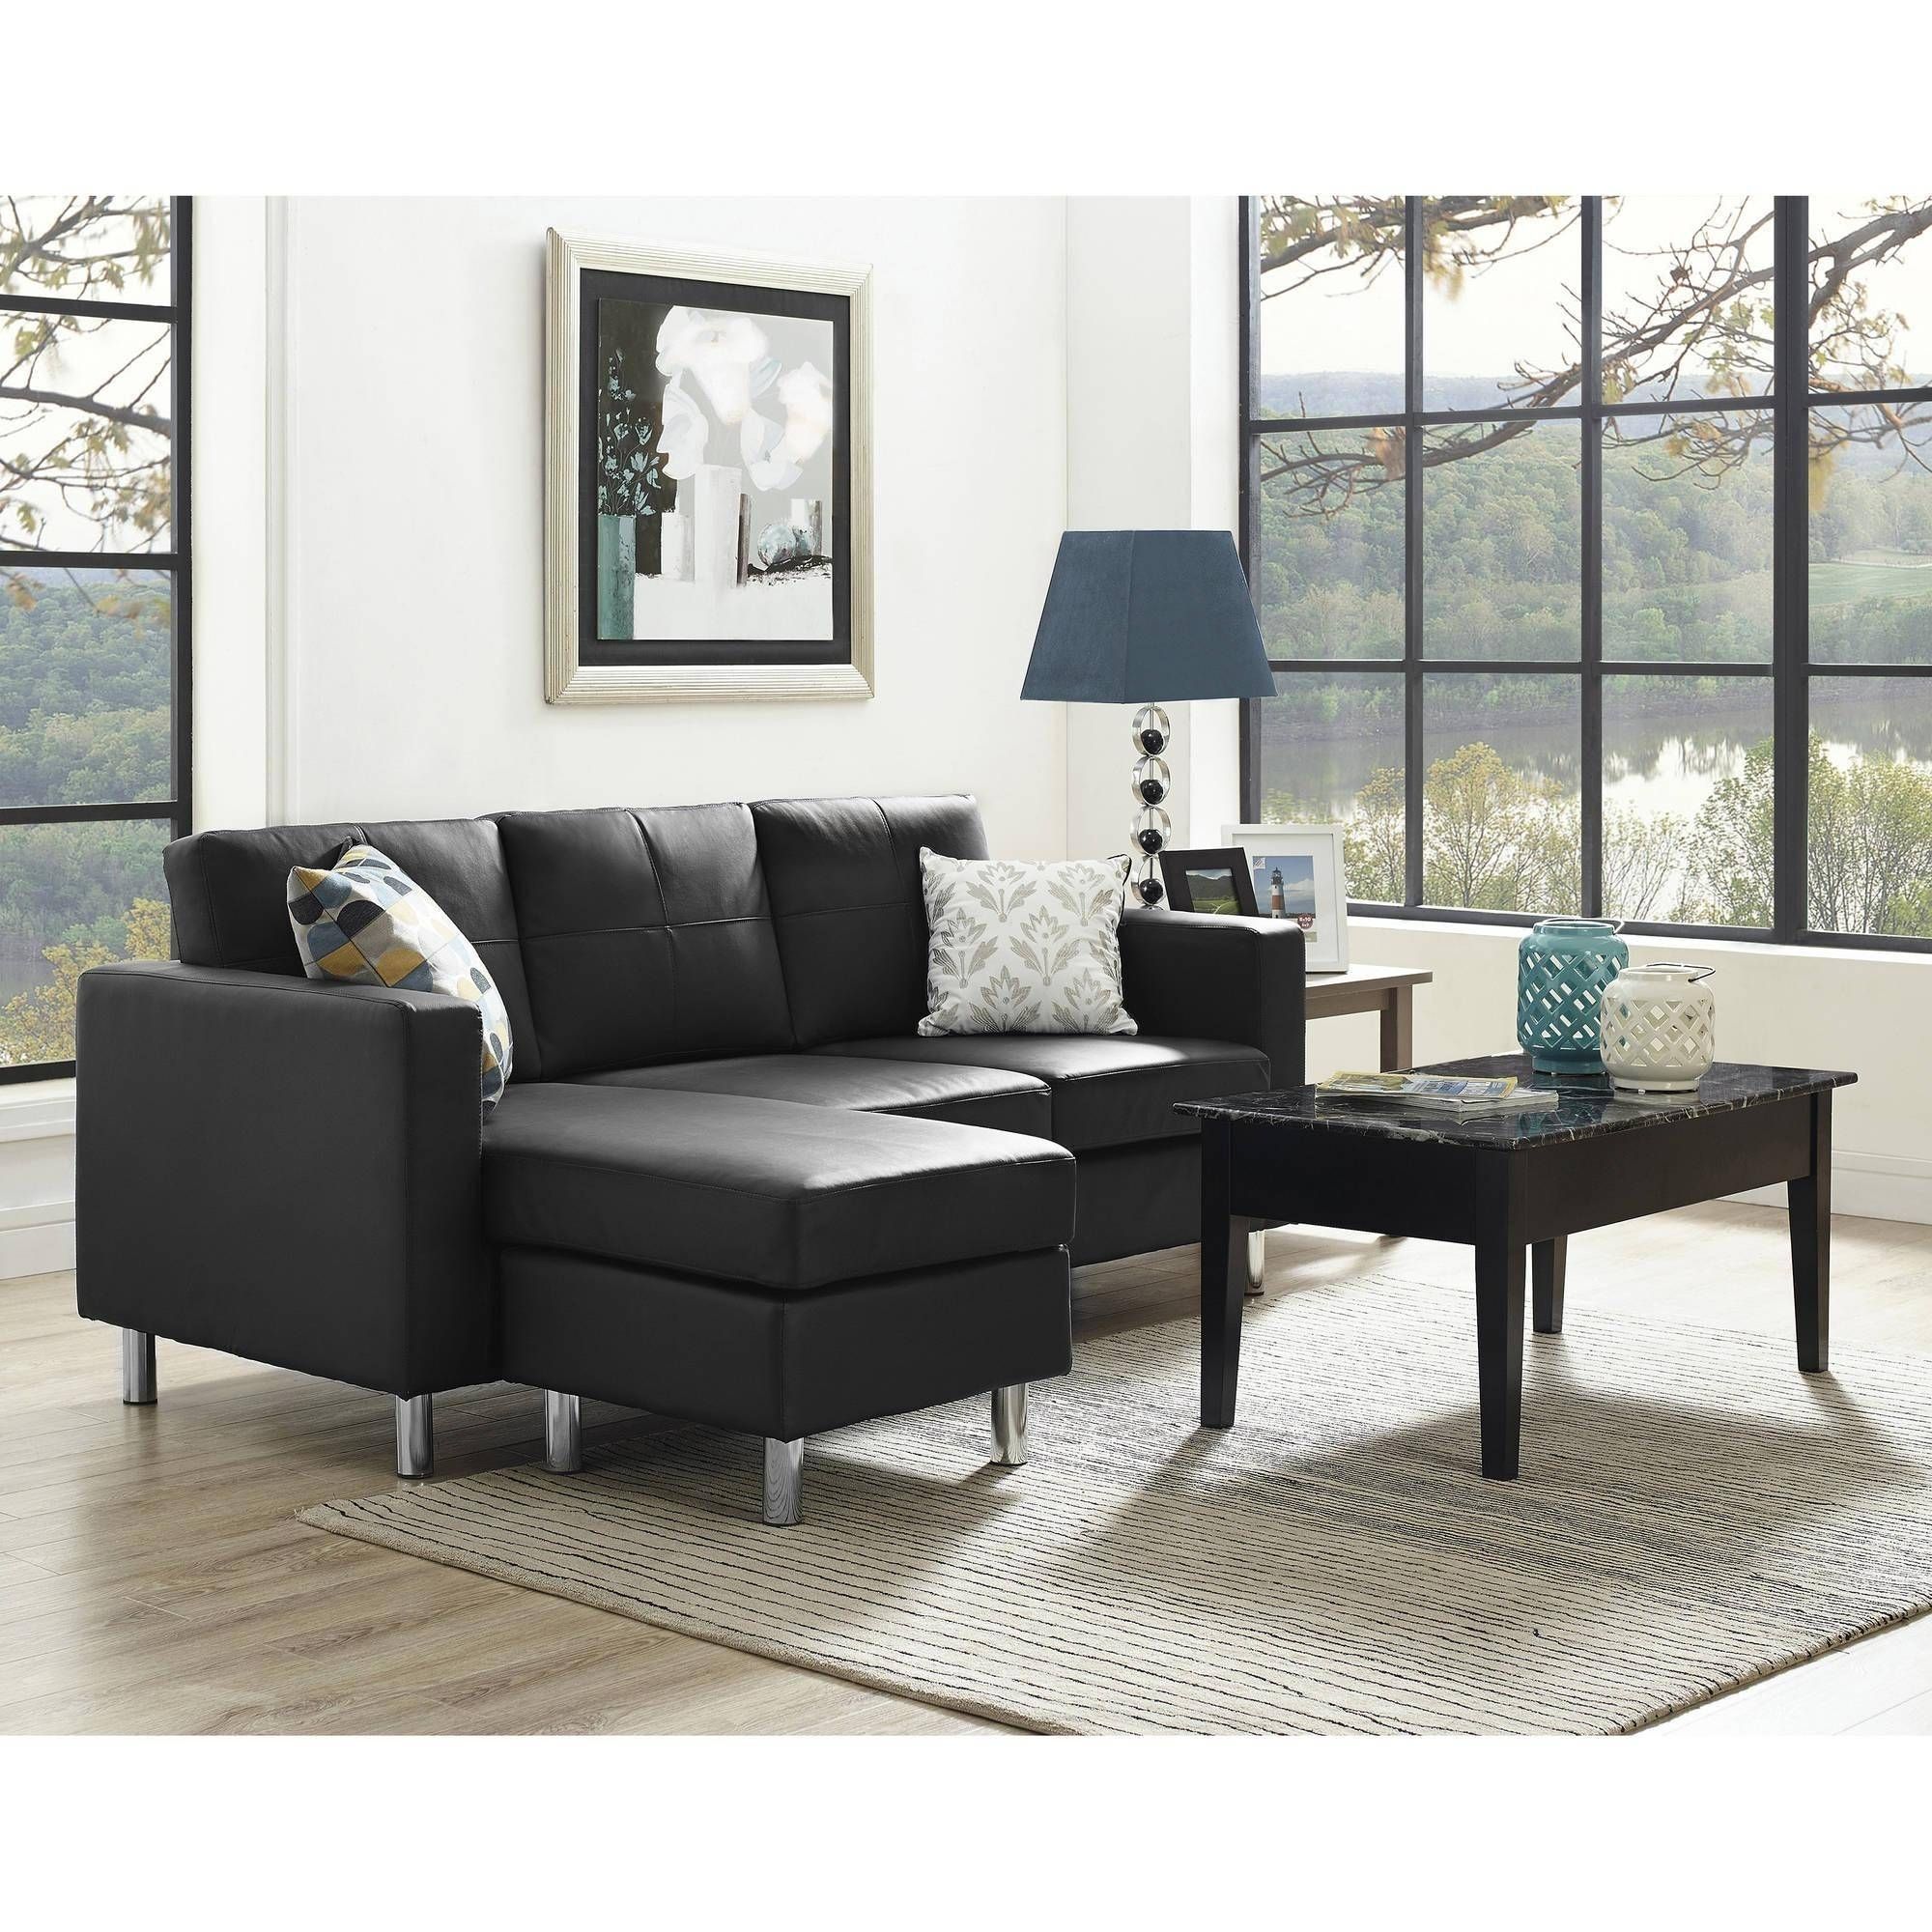 20+ Choices Of Small Black Sofas | Sofa Ideas With Regard To Small Black Sofas (View 8 of 15)